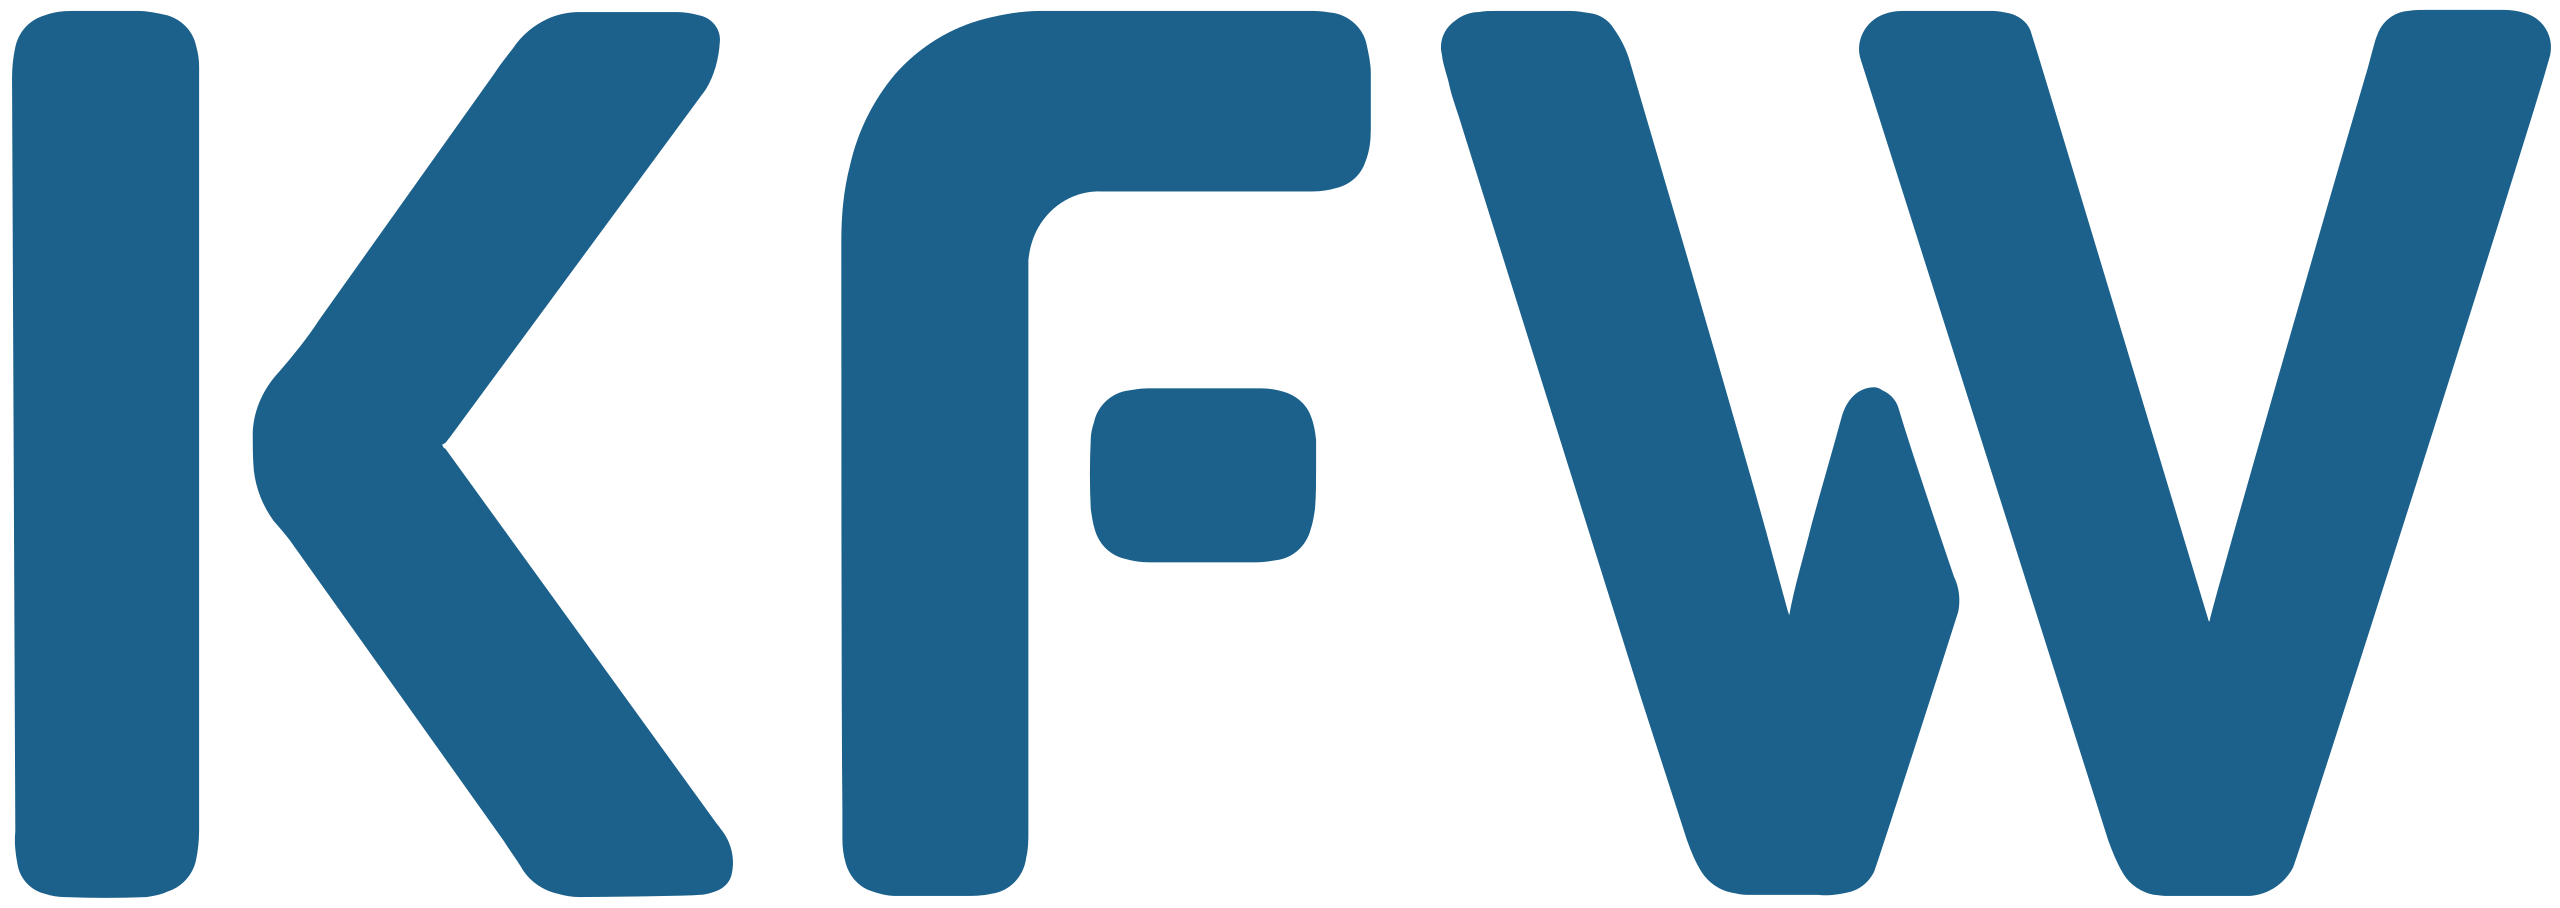 KfW Bank Logo